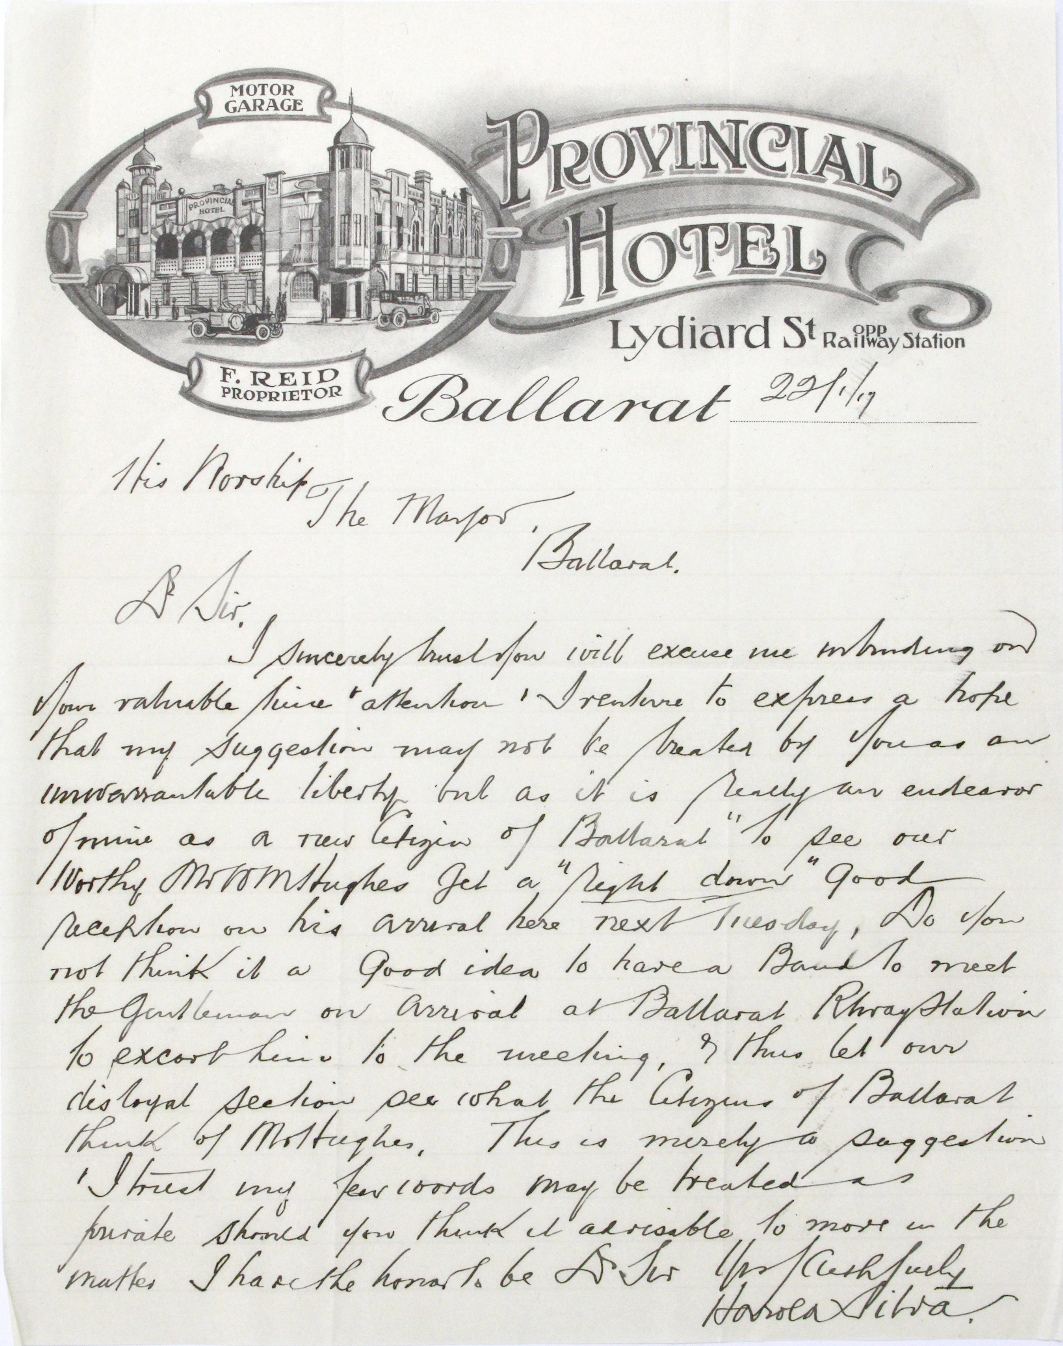 Provincial Hotel letterhead